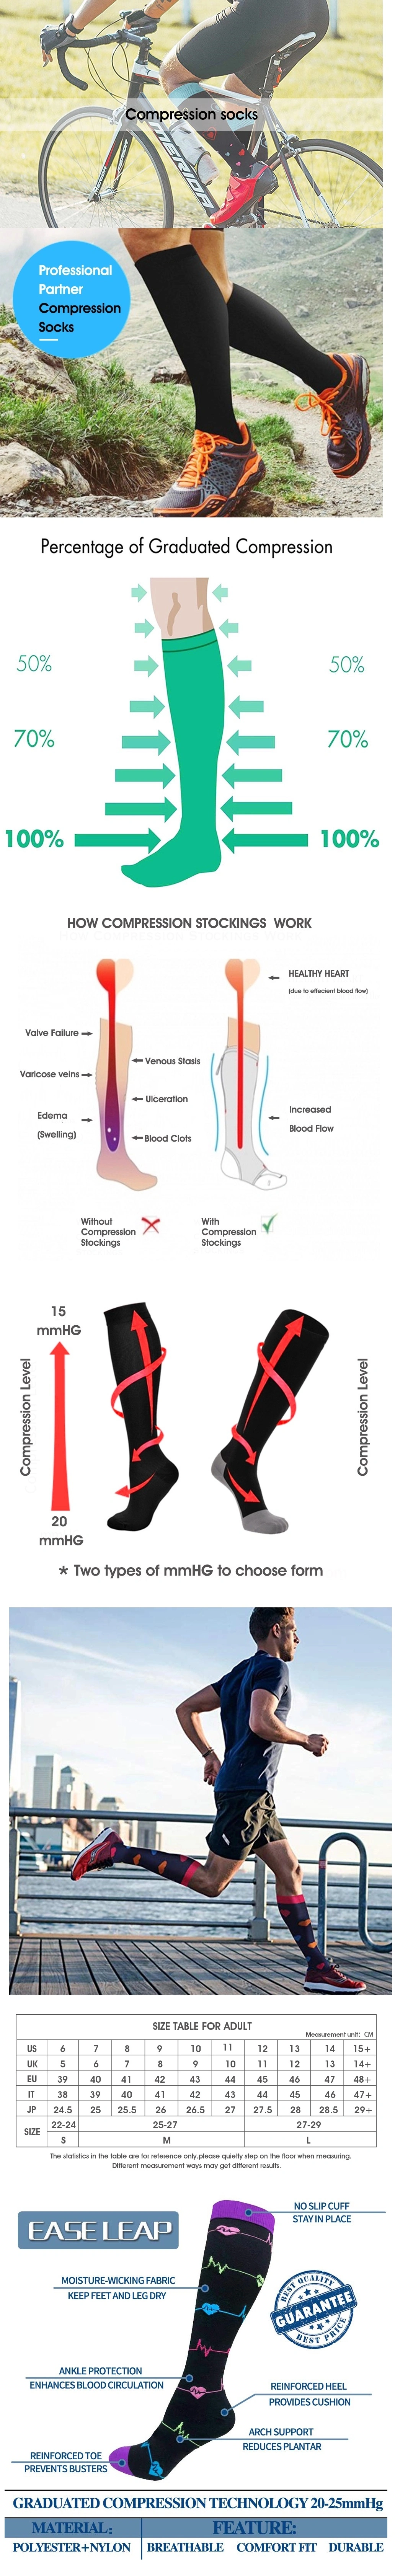 Compression Spot Copper Fiber Medical Compression Nylon Foot Socks Athletic Socks Sports Socks